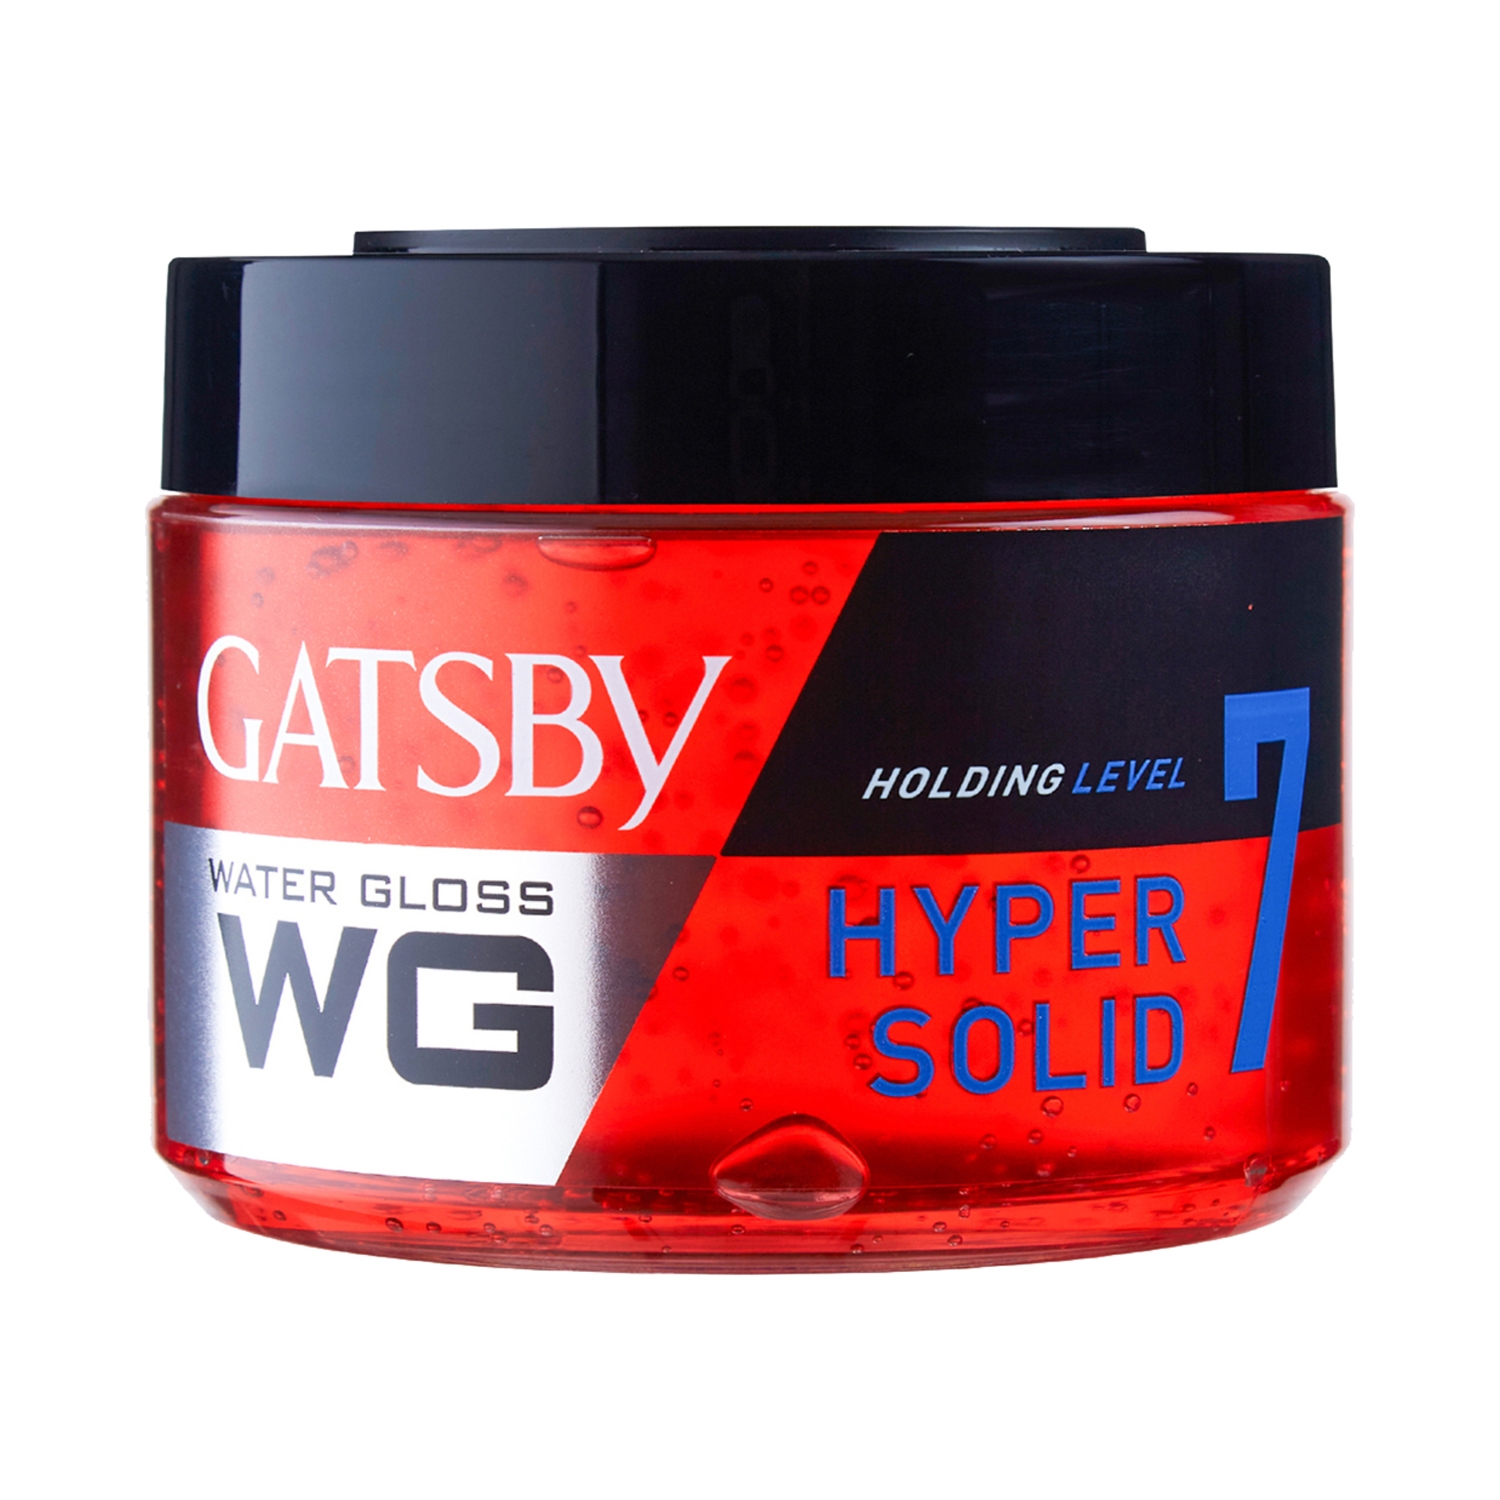 Gatsby Water Gloss Hyper Solid Gel (300g)